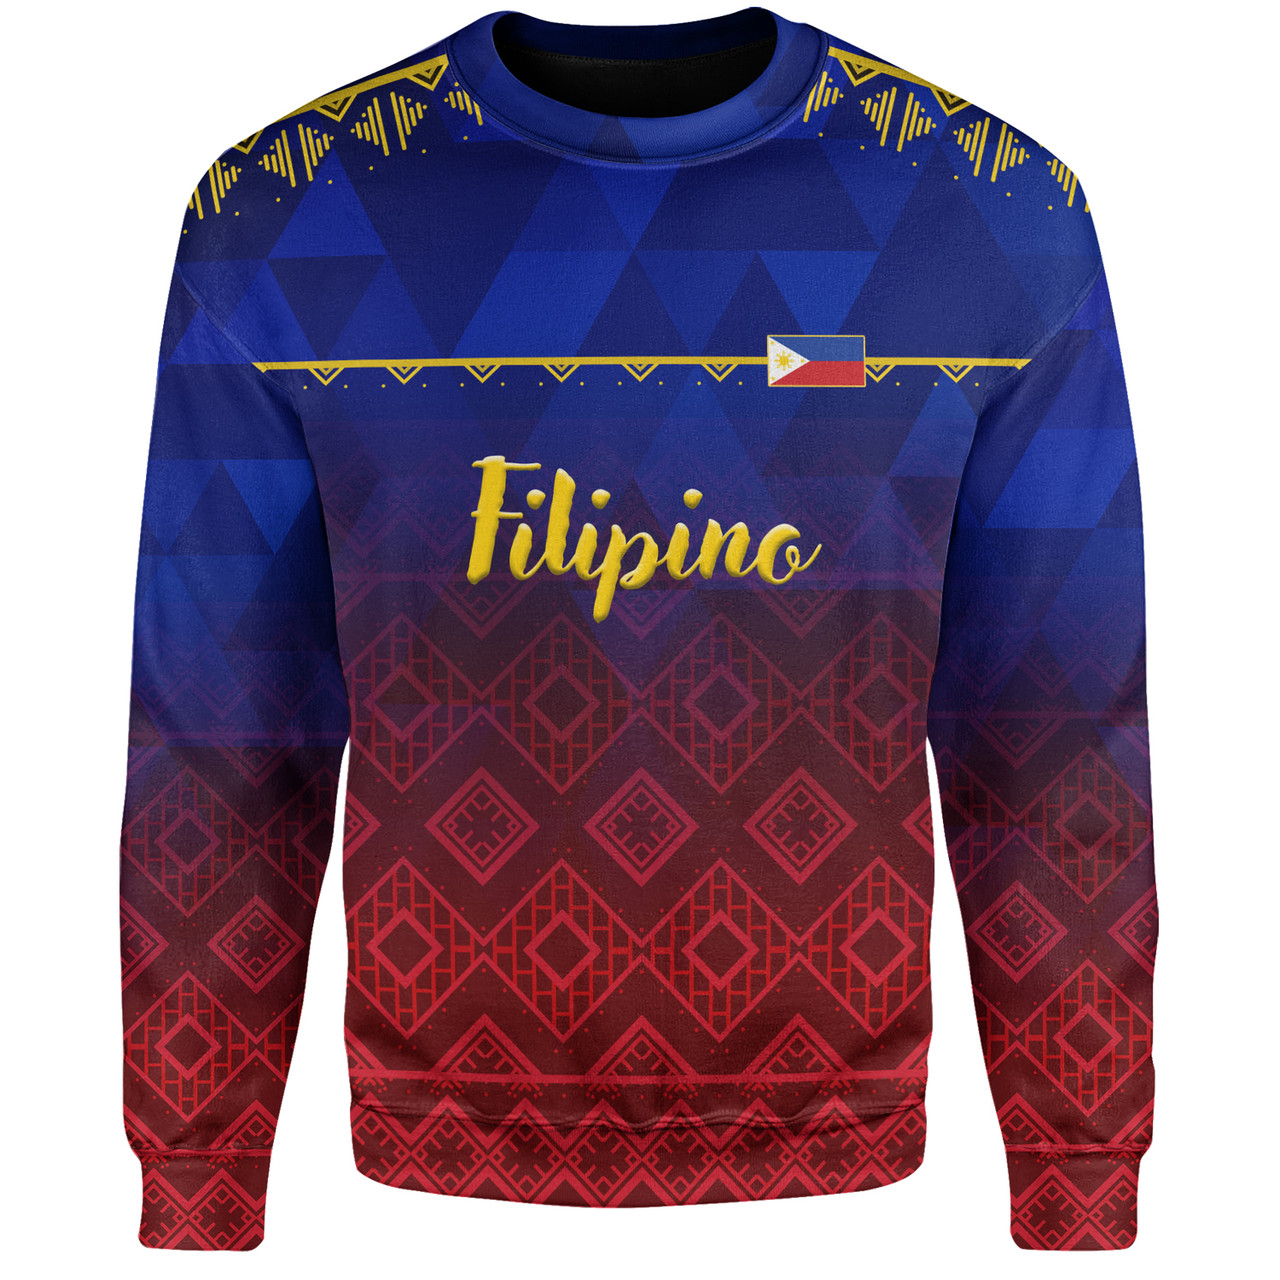 Philippines Filipinos Sweatshirt Lowpolly Pattern with Polynesian Motif